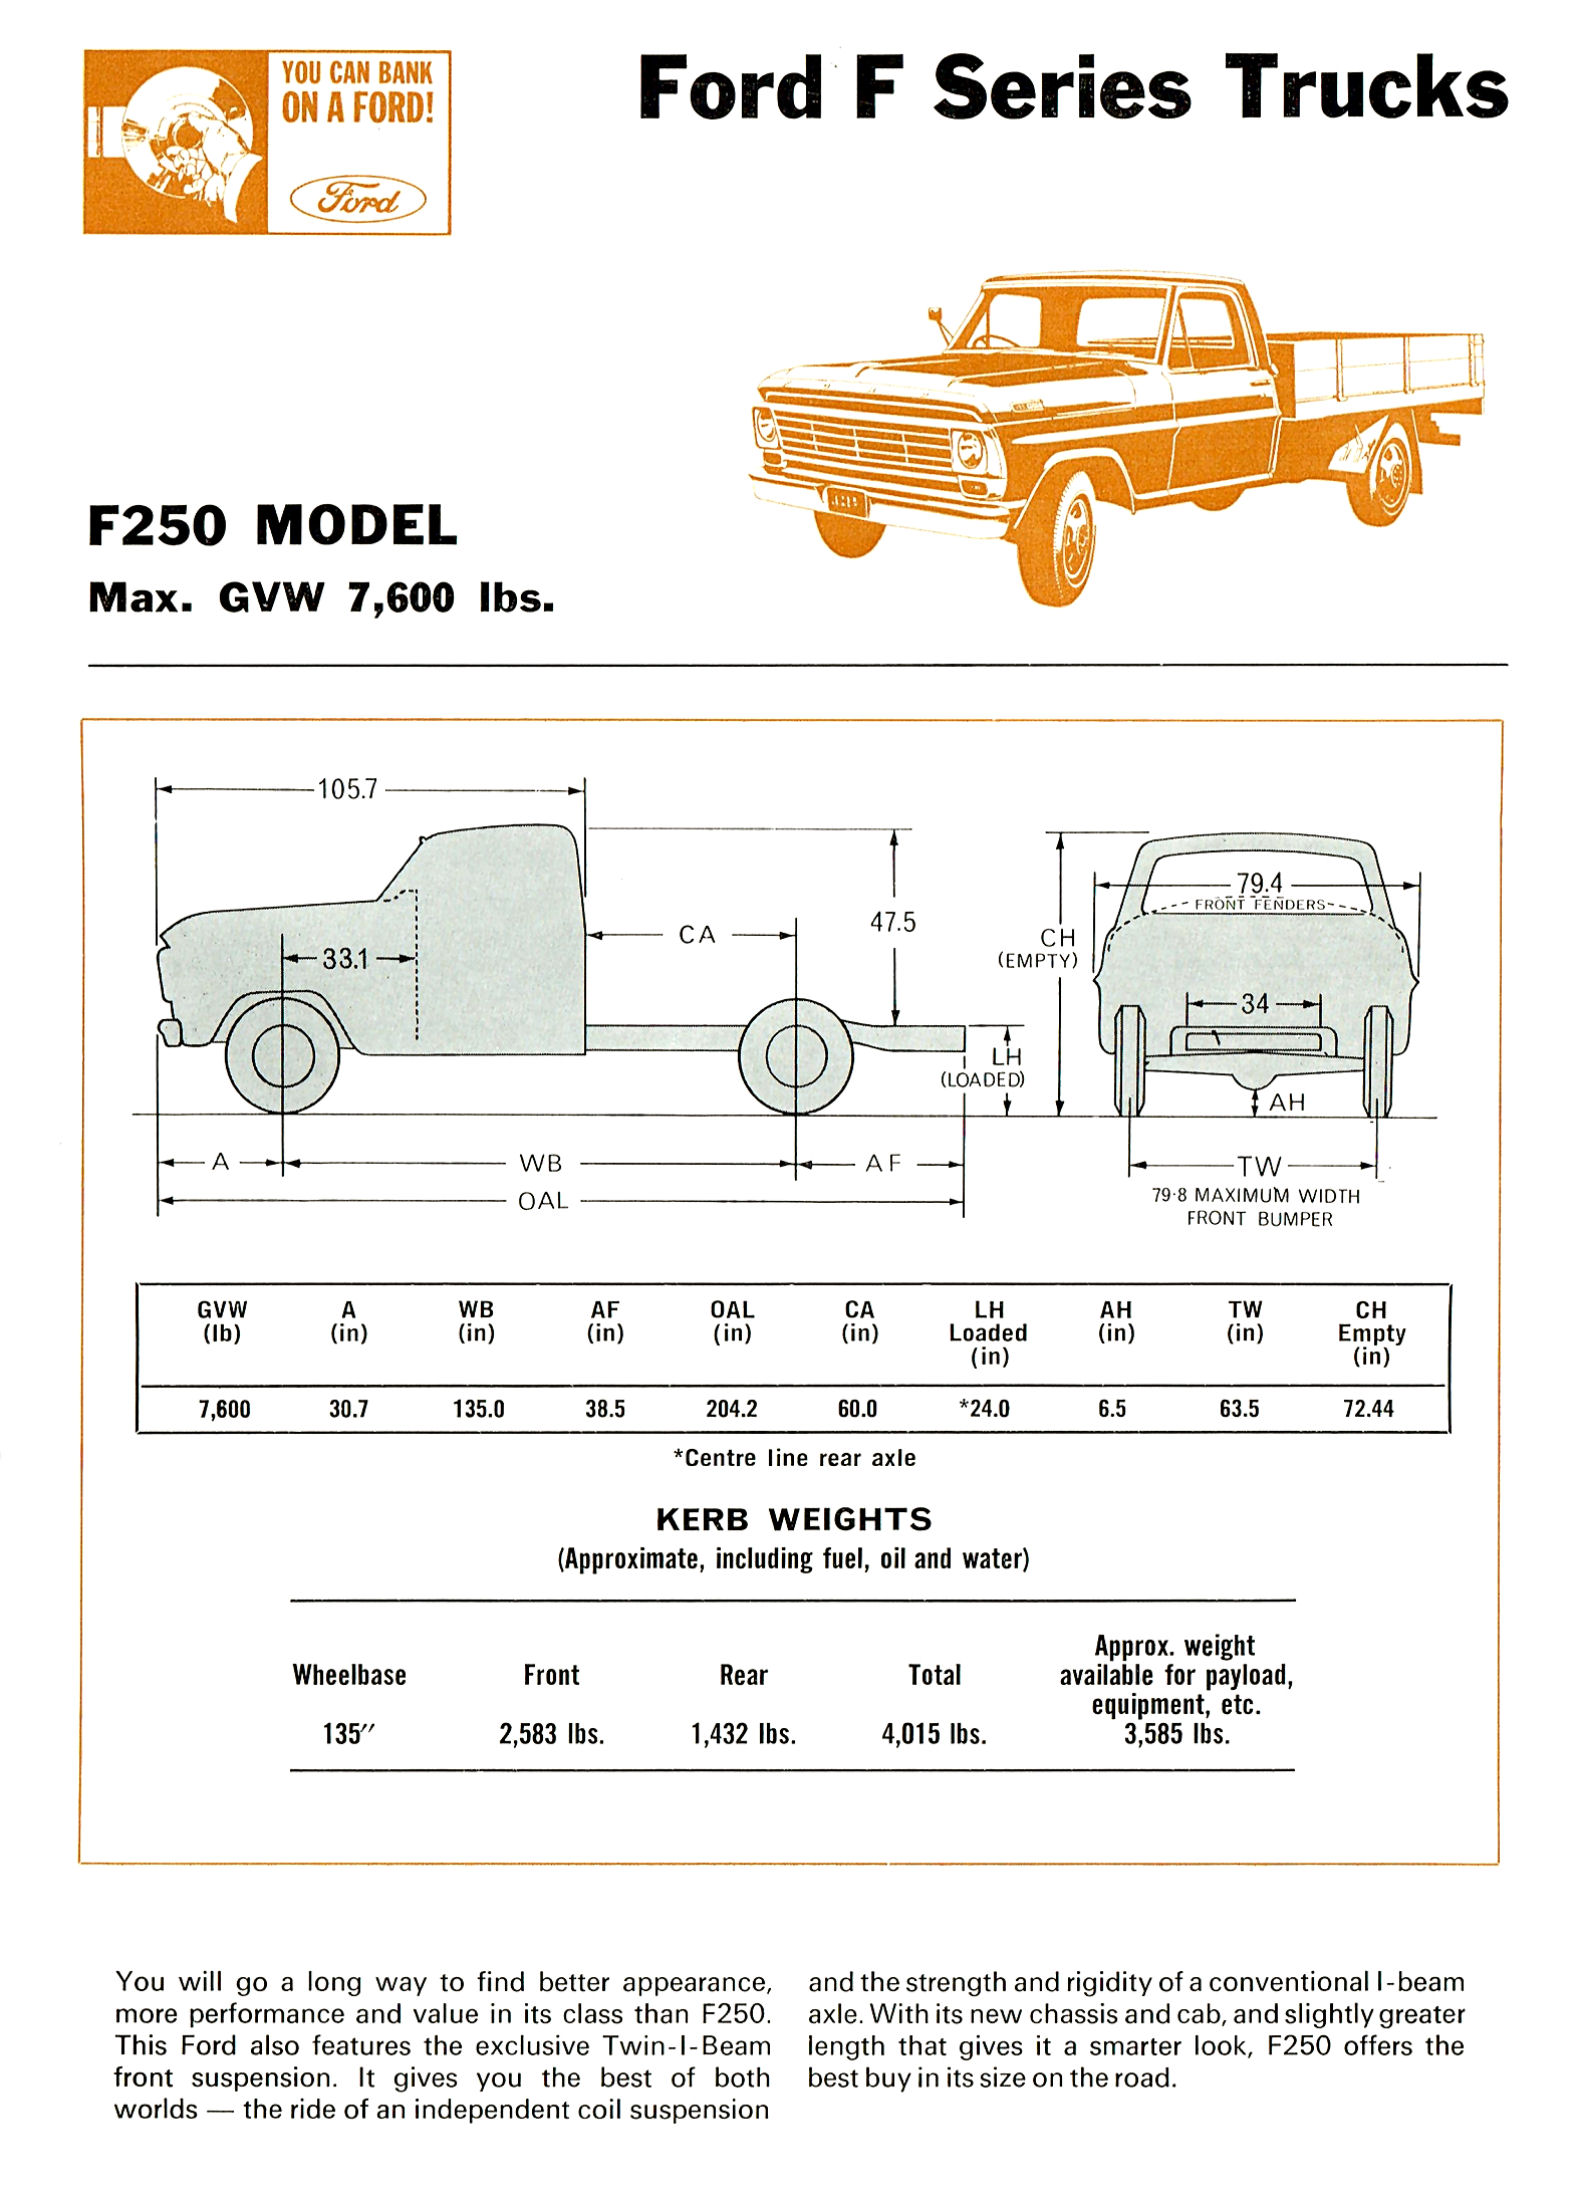 1967 Ford F Series Trucks (Aus)-i02a.jpg-2022-12-7 13.22.40